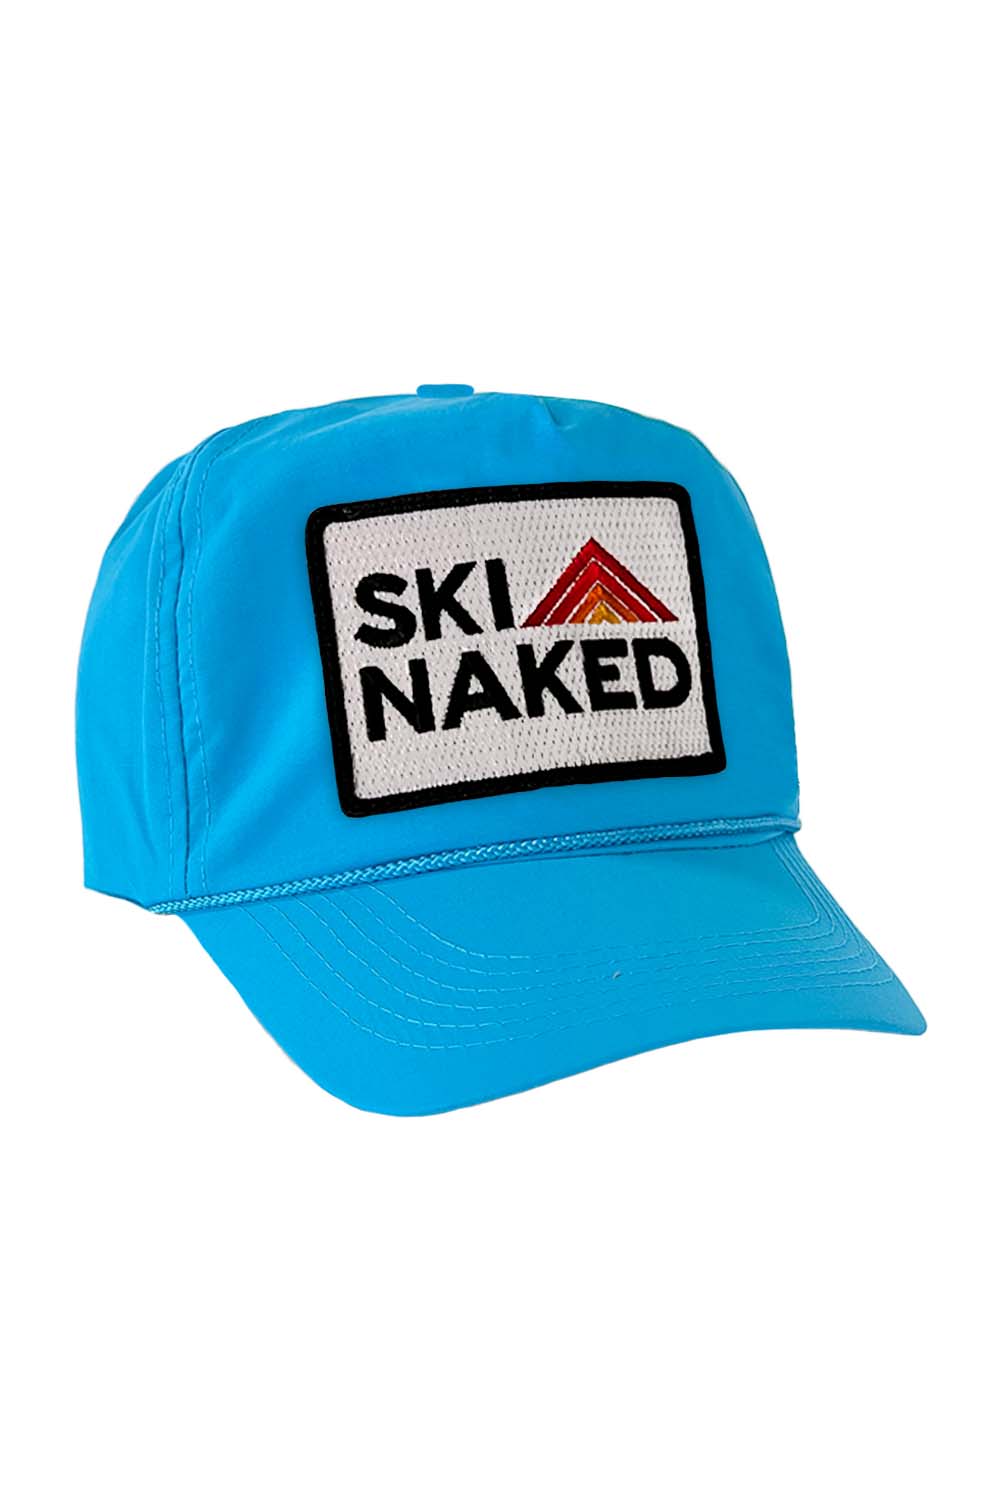 SKI NAKED - VINTAGE NYLON TRUCKER HAT HATS Aviator Nation LIGHT BLUE 